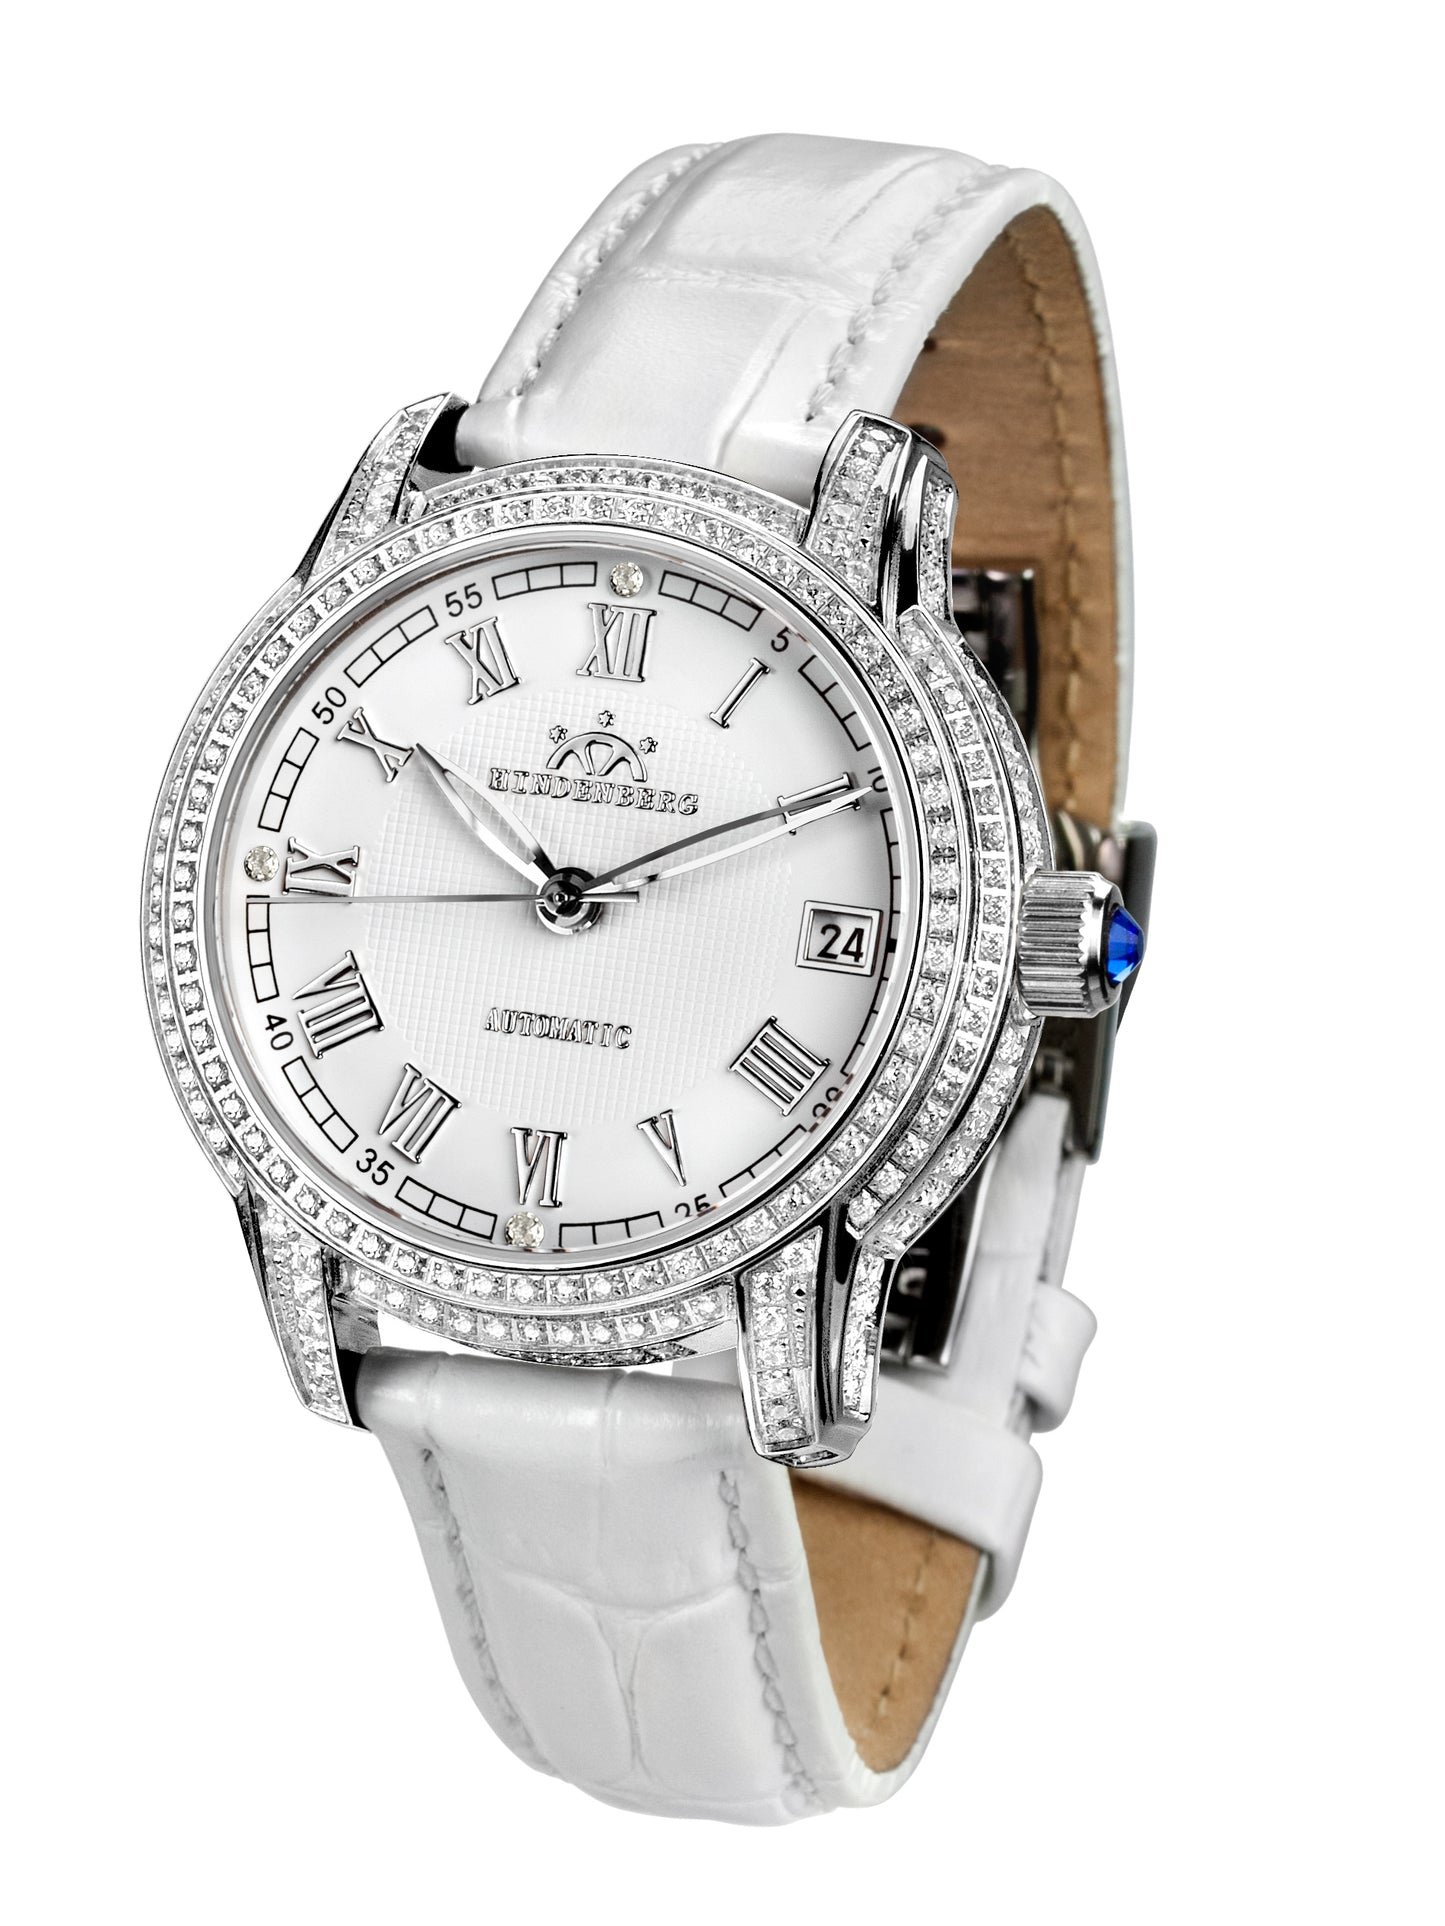 Automatic watches — Duchess II — Hindenberg — Stahl weiss